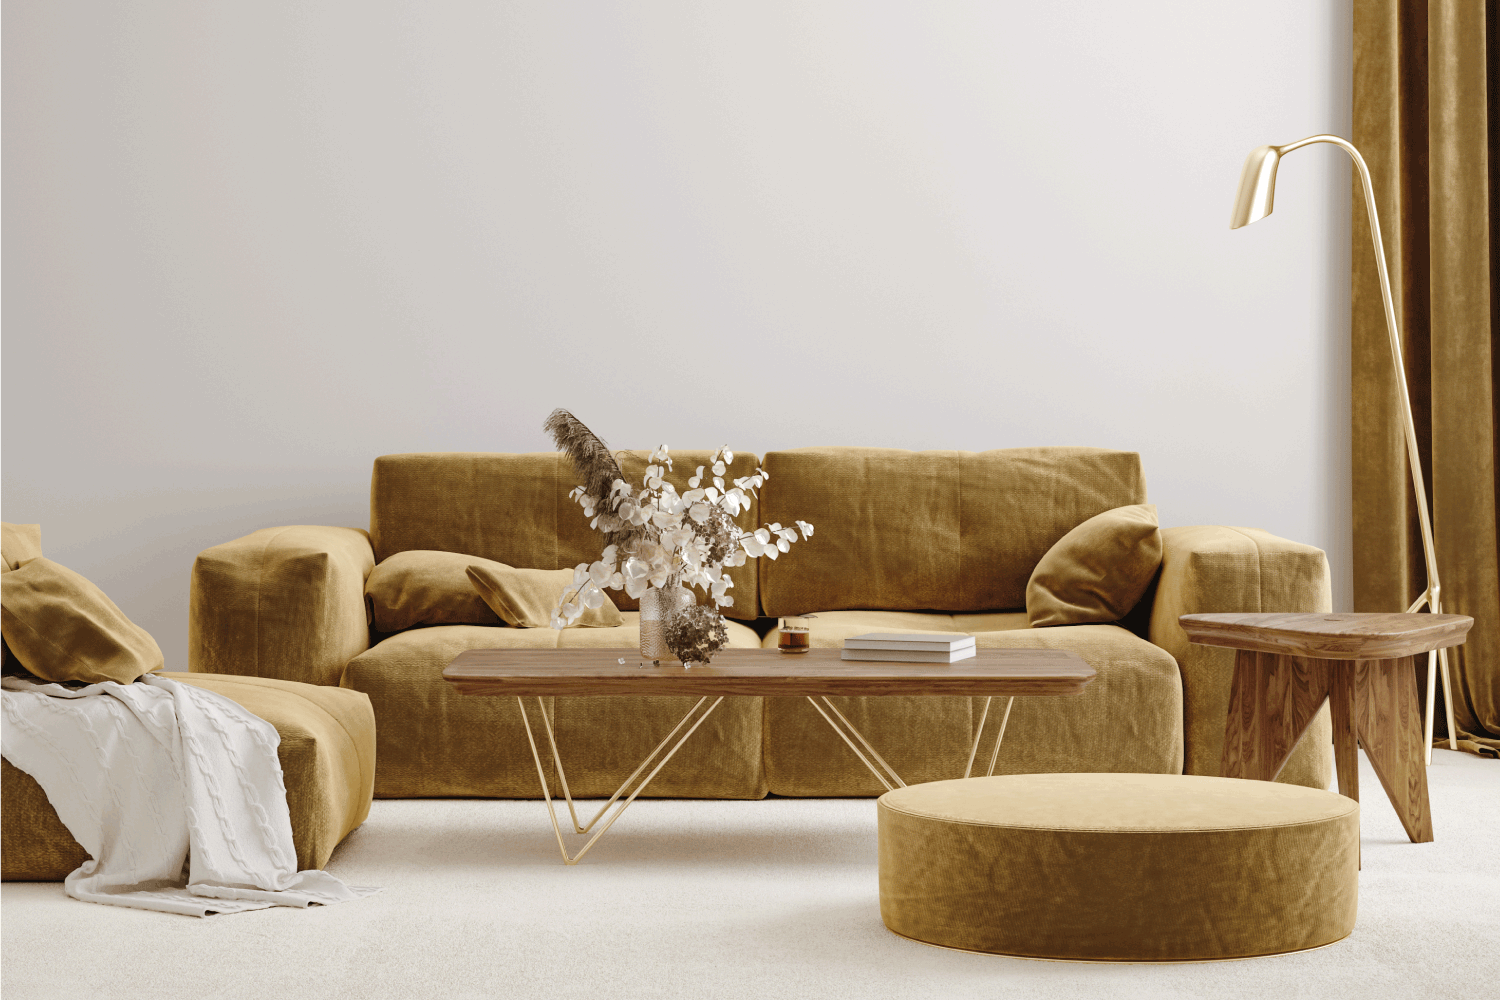 Retro Gold And Beige Living Room. Modern living room interior with stylish velvet sofa, beige carpet and golden floor lamp